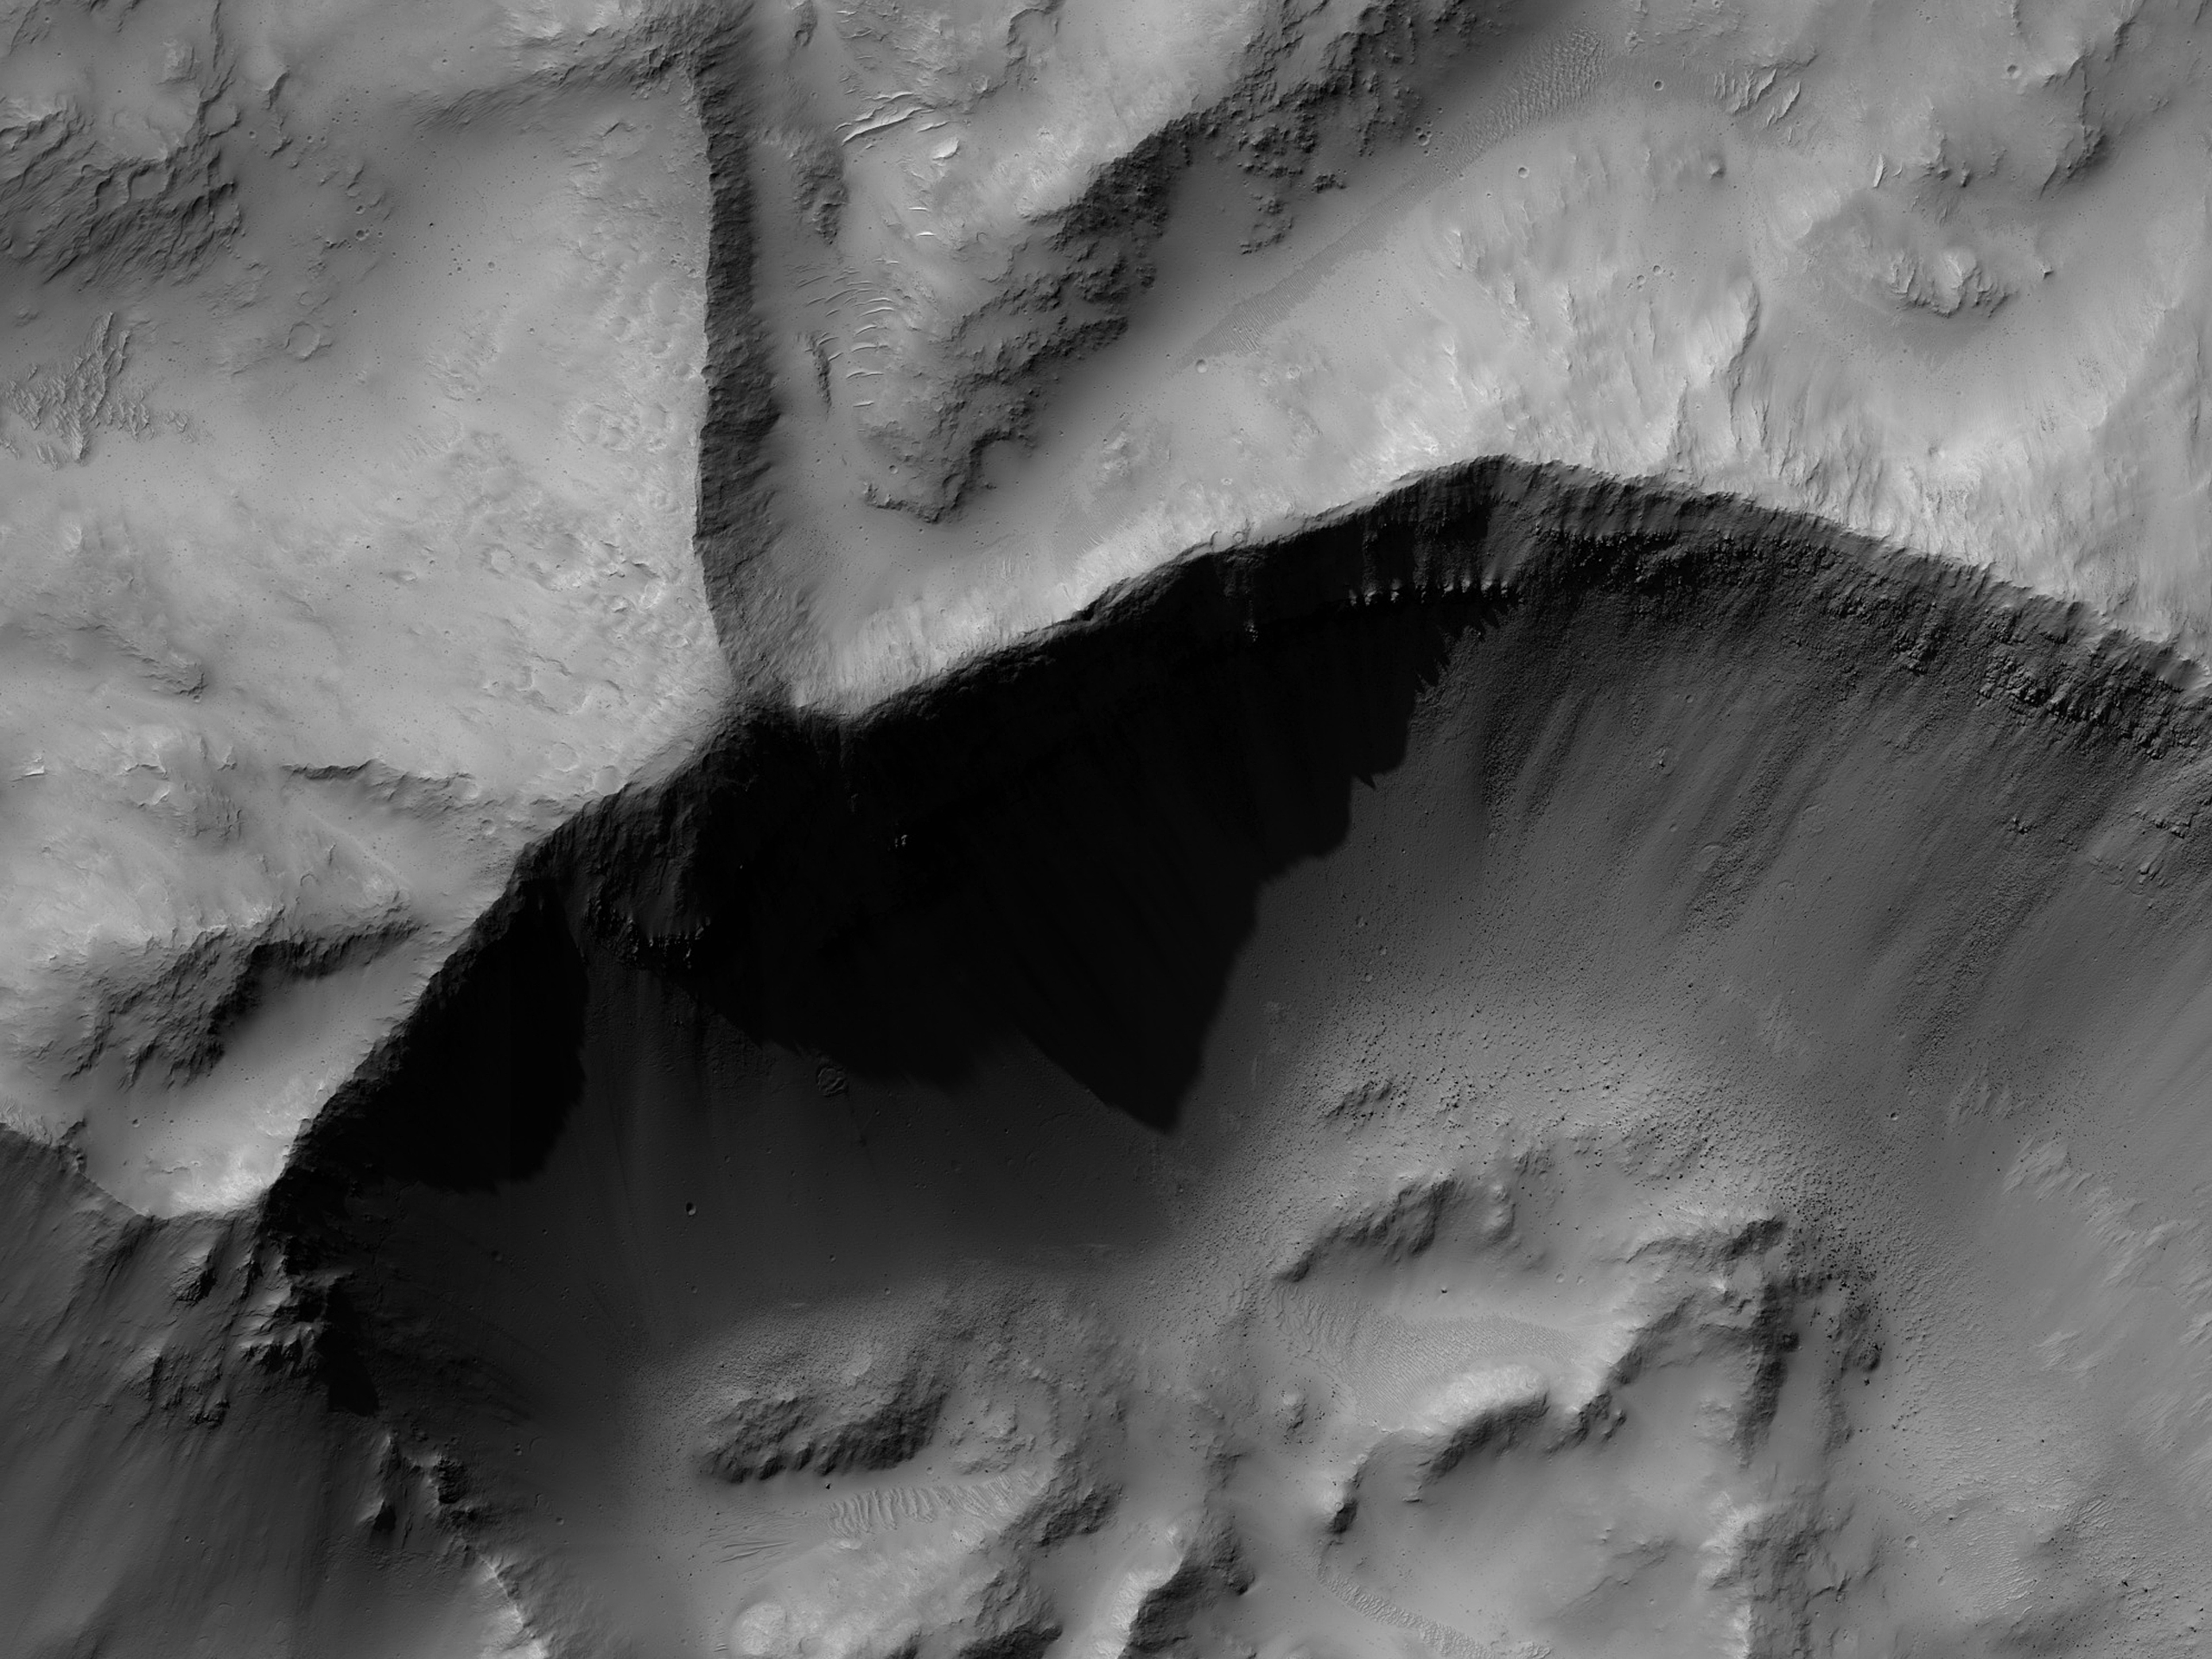 Interkovrantaj alfrapaj krateroj